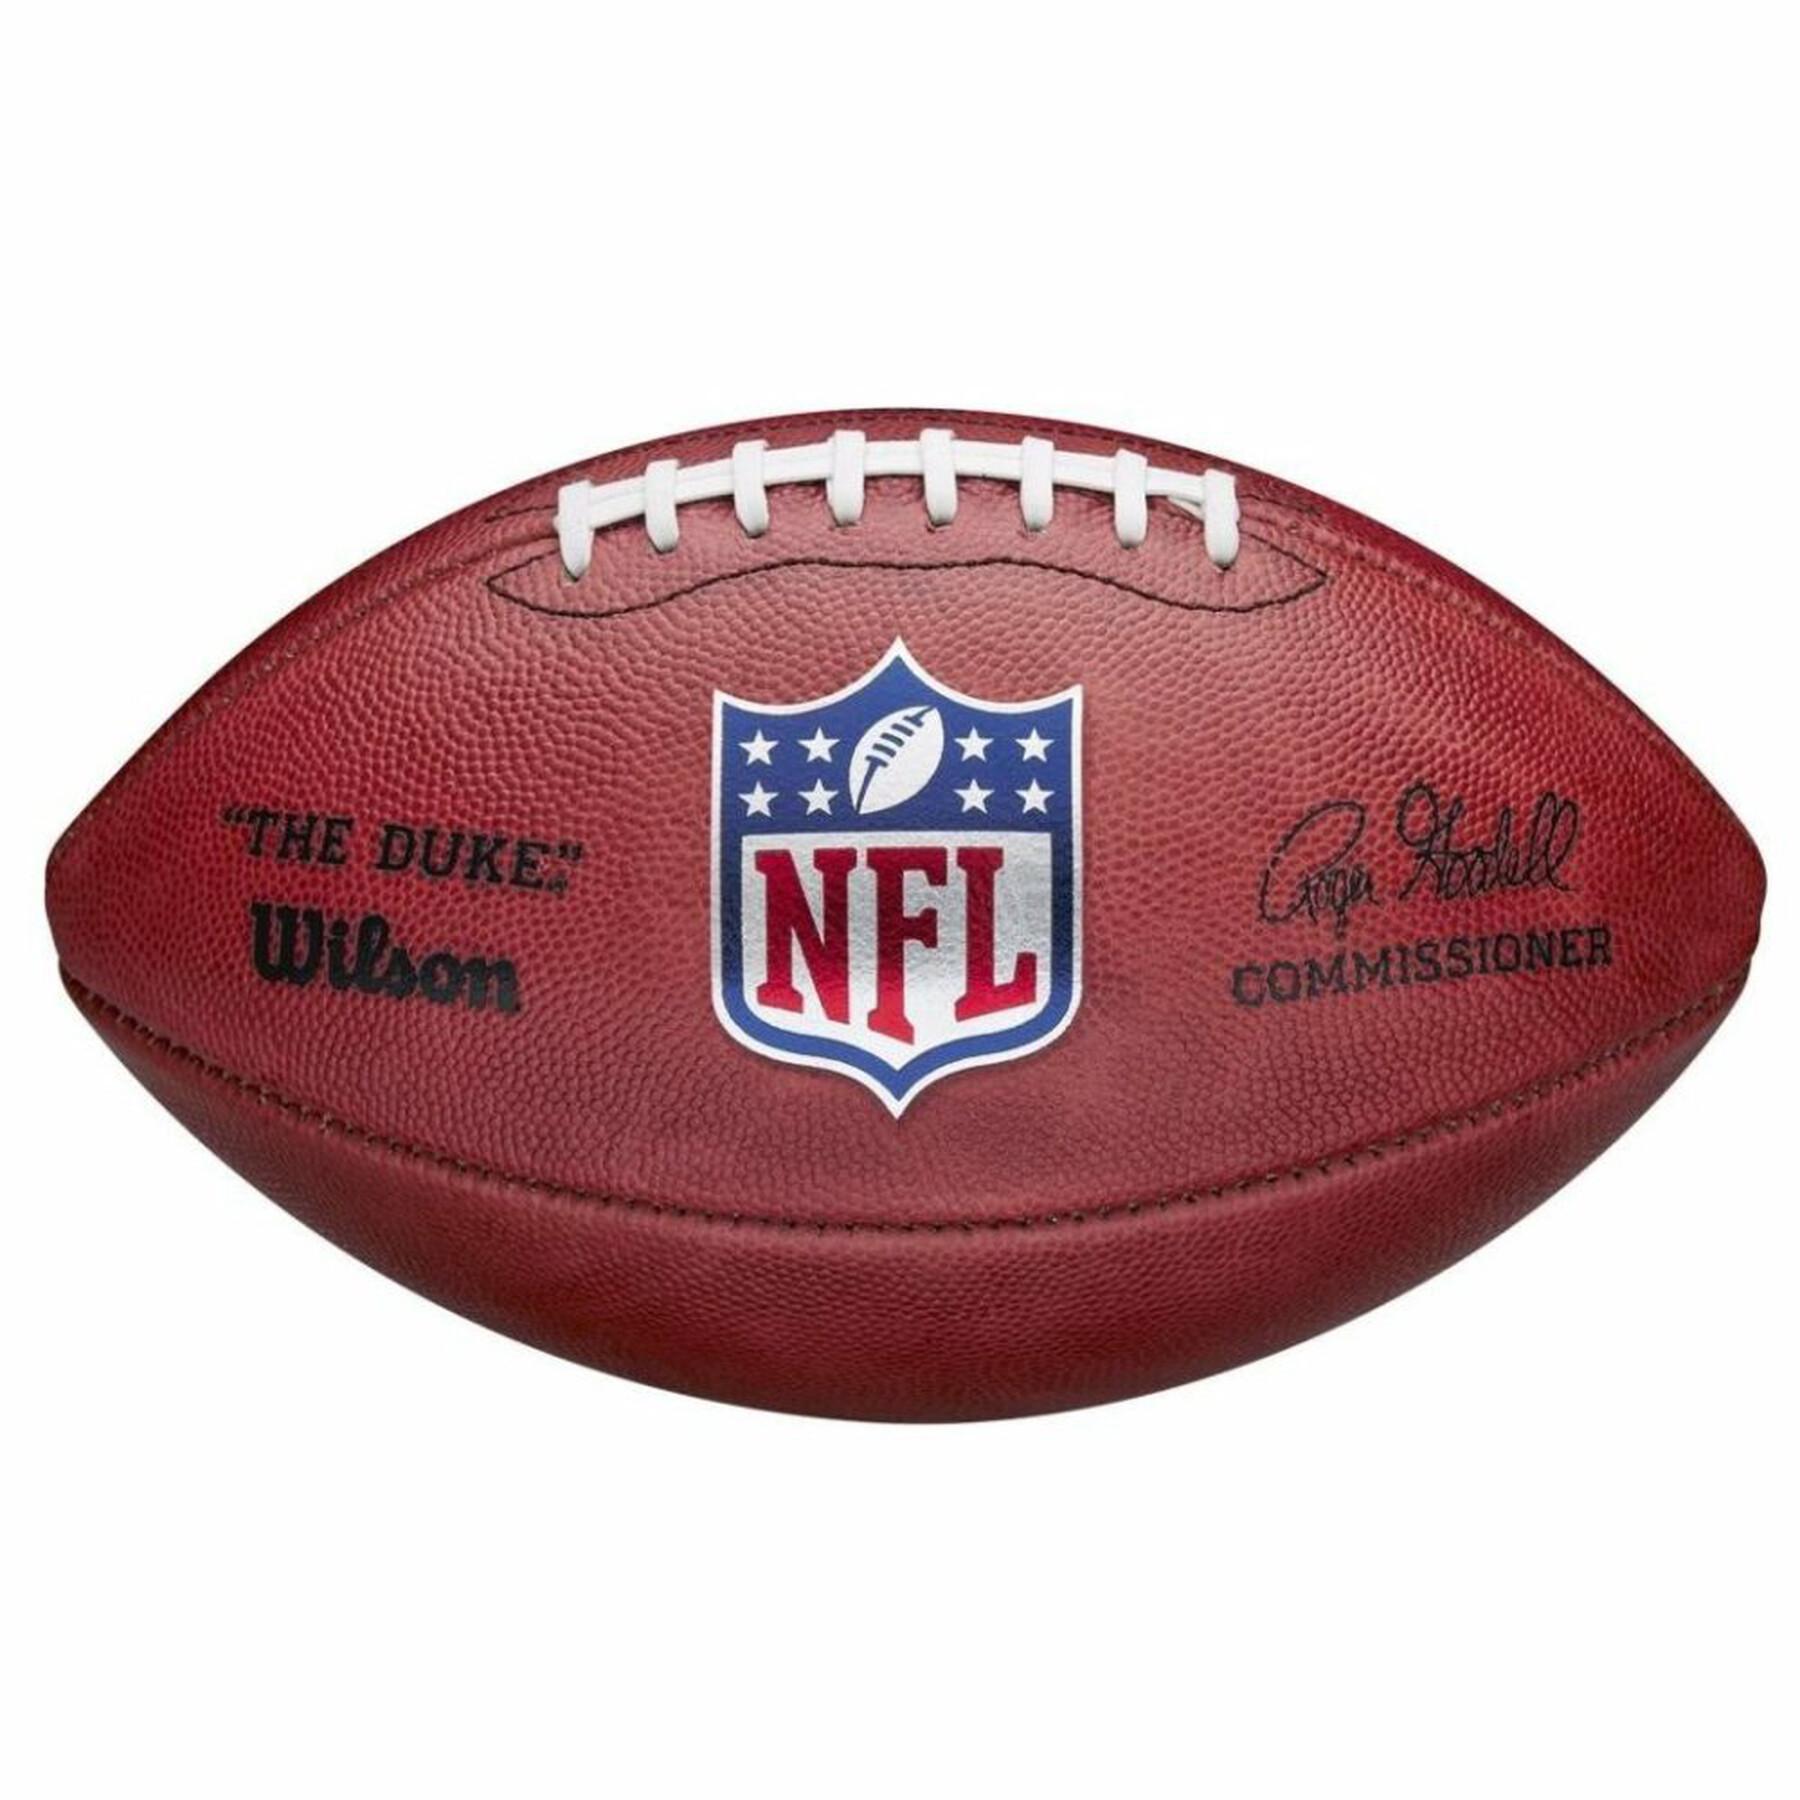 Nieuw NFL DUKE Game Ball